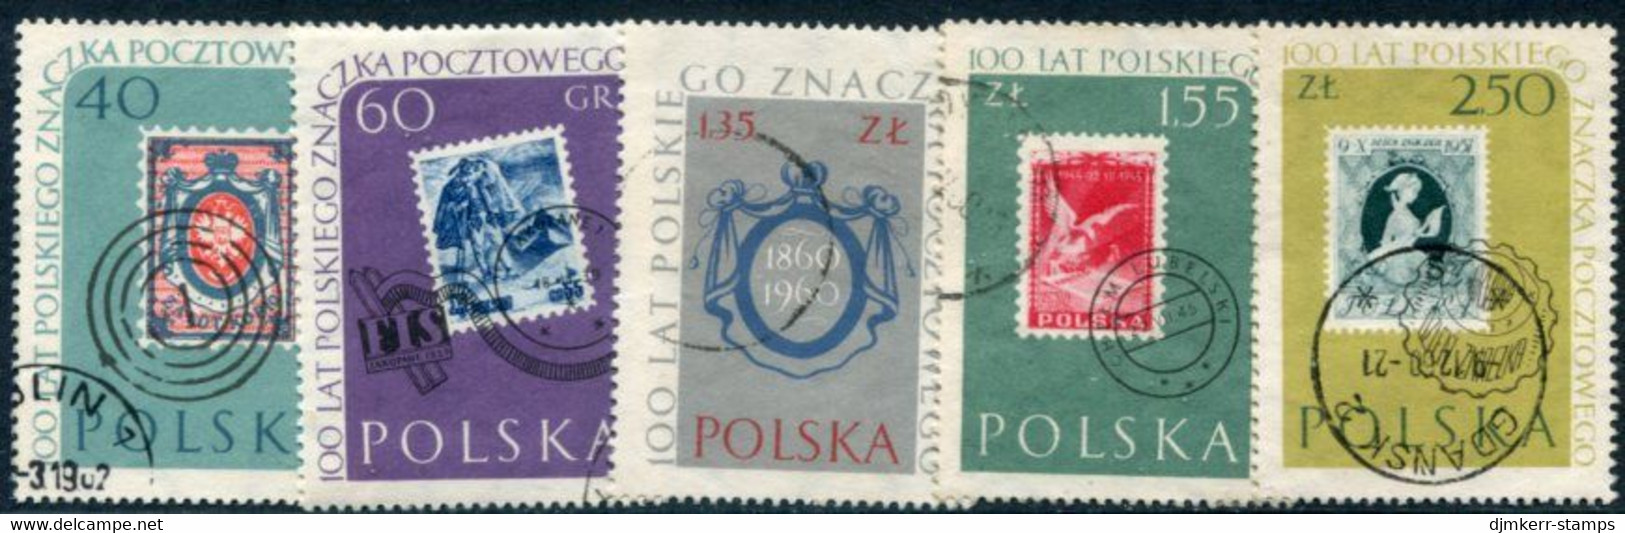 POLAND 1960 Stamp Centenary Set Used.  Michel 1151-55 - Gebraucht